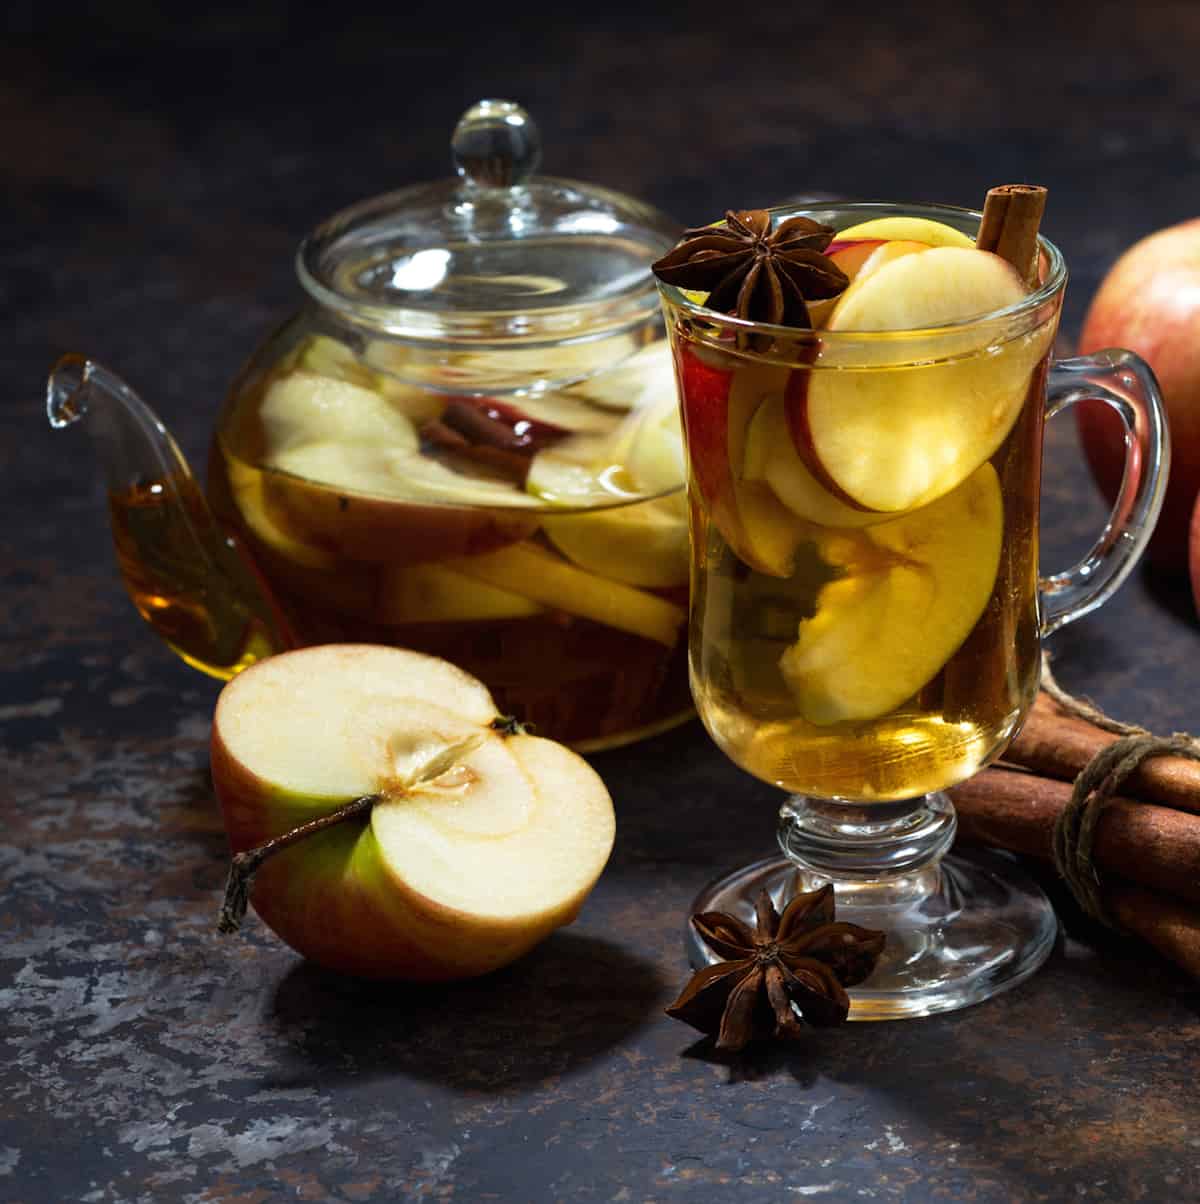 apple tea in glass teapot and glass mug